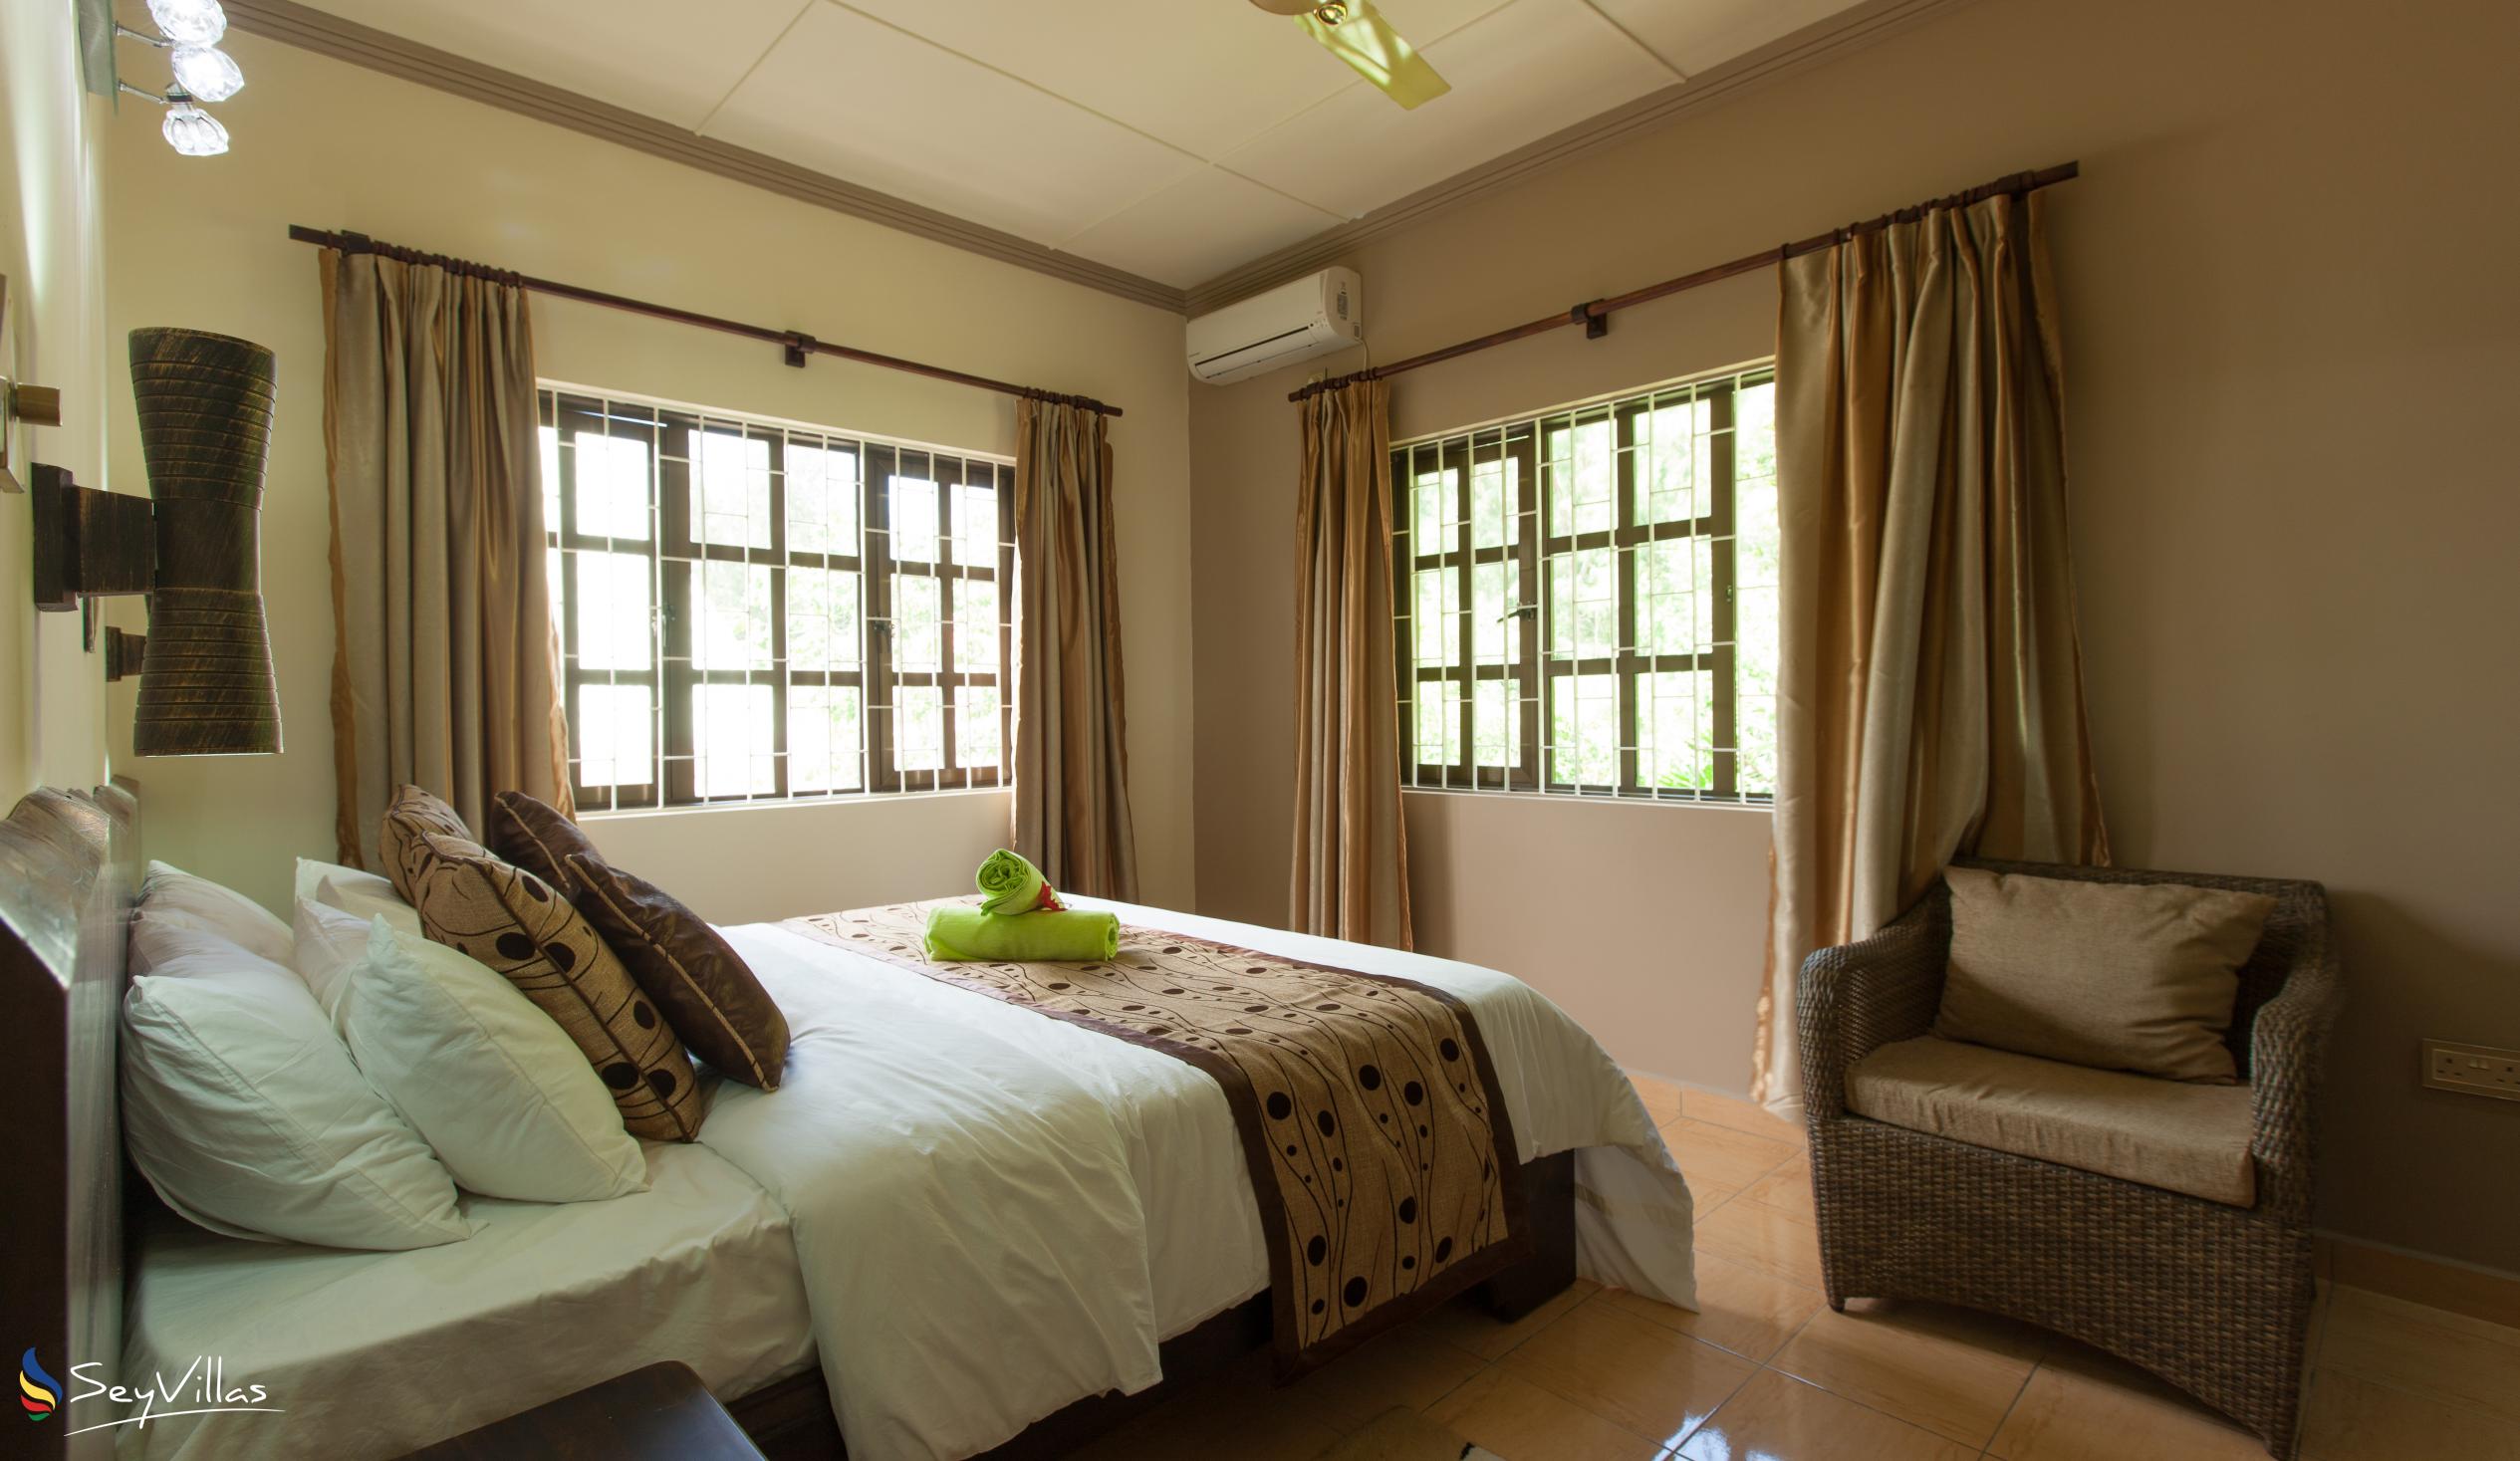 Foto 110: Chez Bea Villa - Appartamento con 1 camera - Praslin (Seychelles)